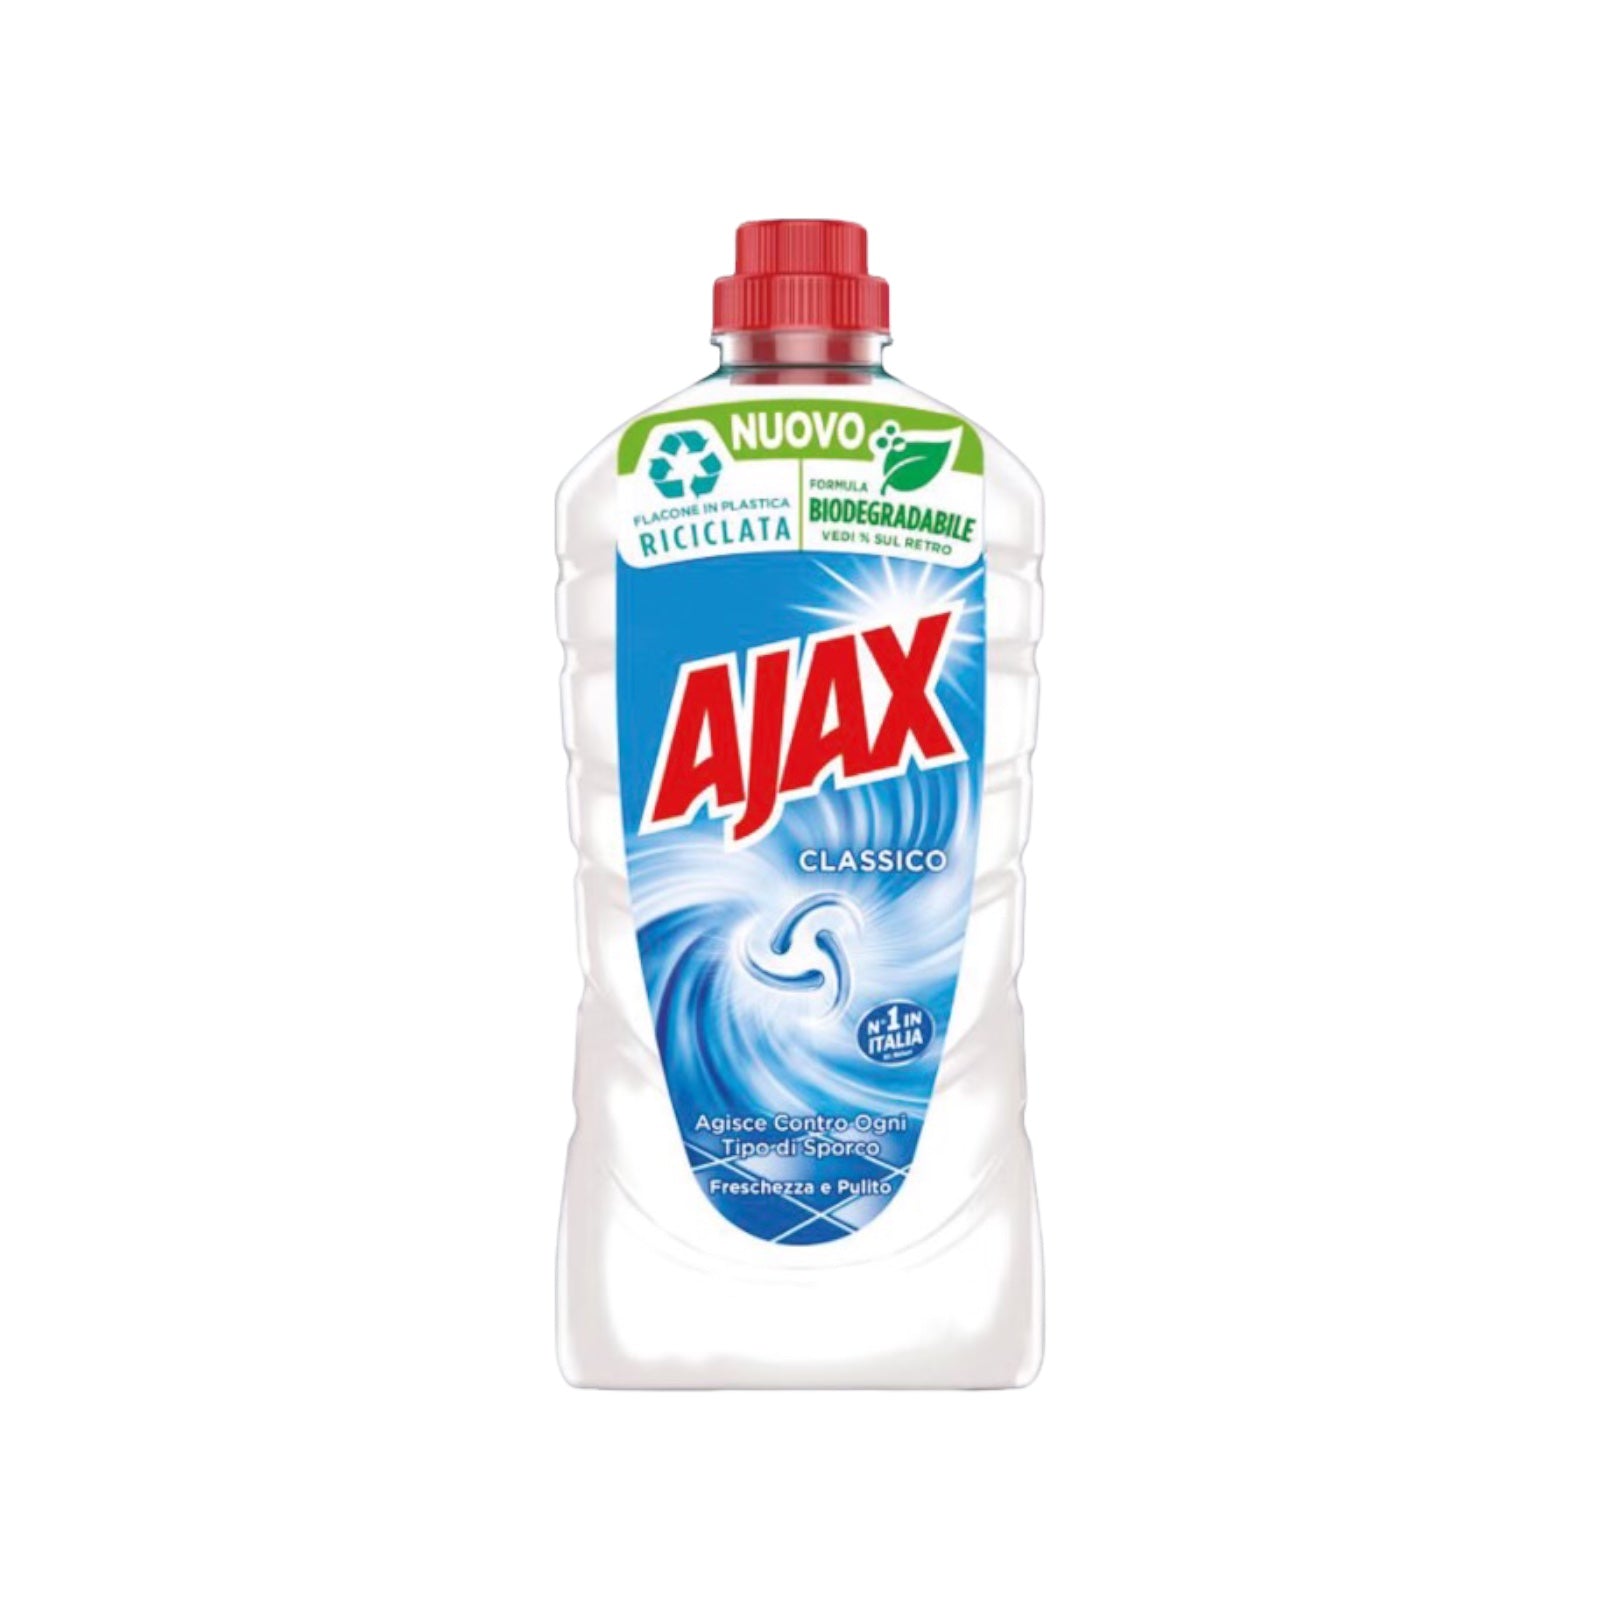 Ajax Classic floor cleaner hygiene and freshness 950ml